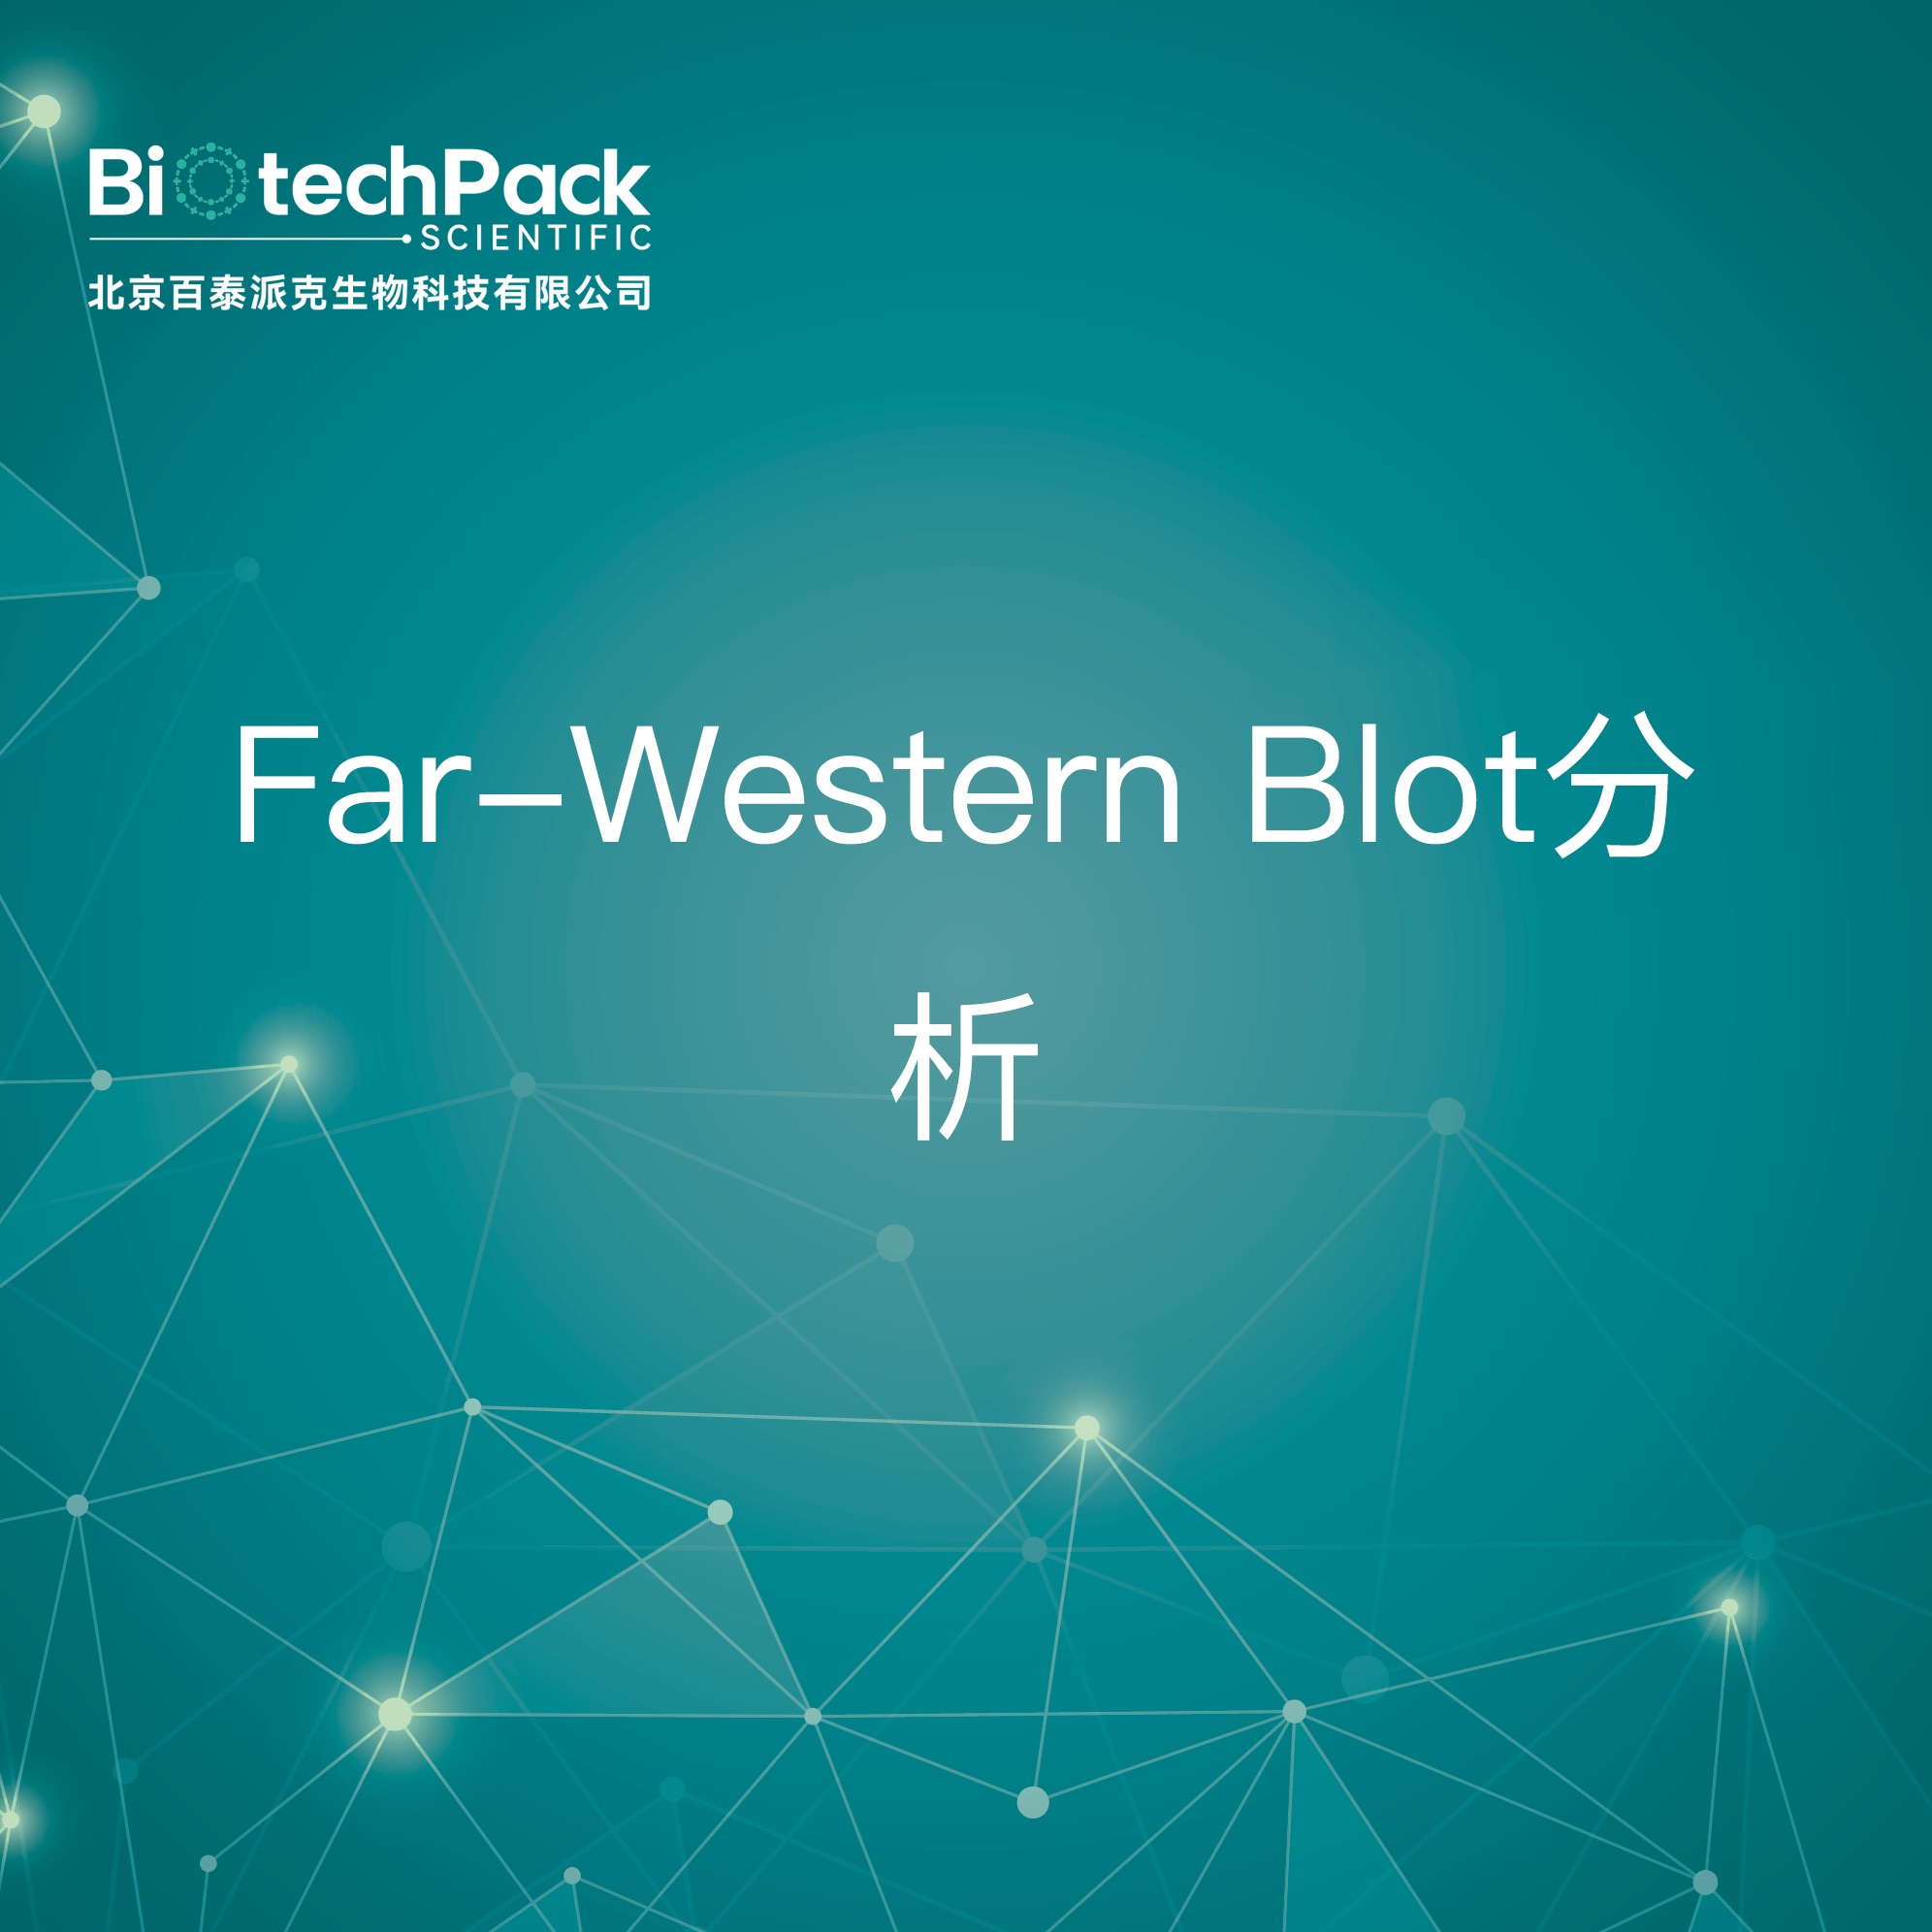 Far-Western Blot分析-检测技术服务